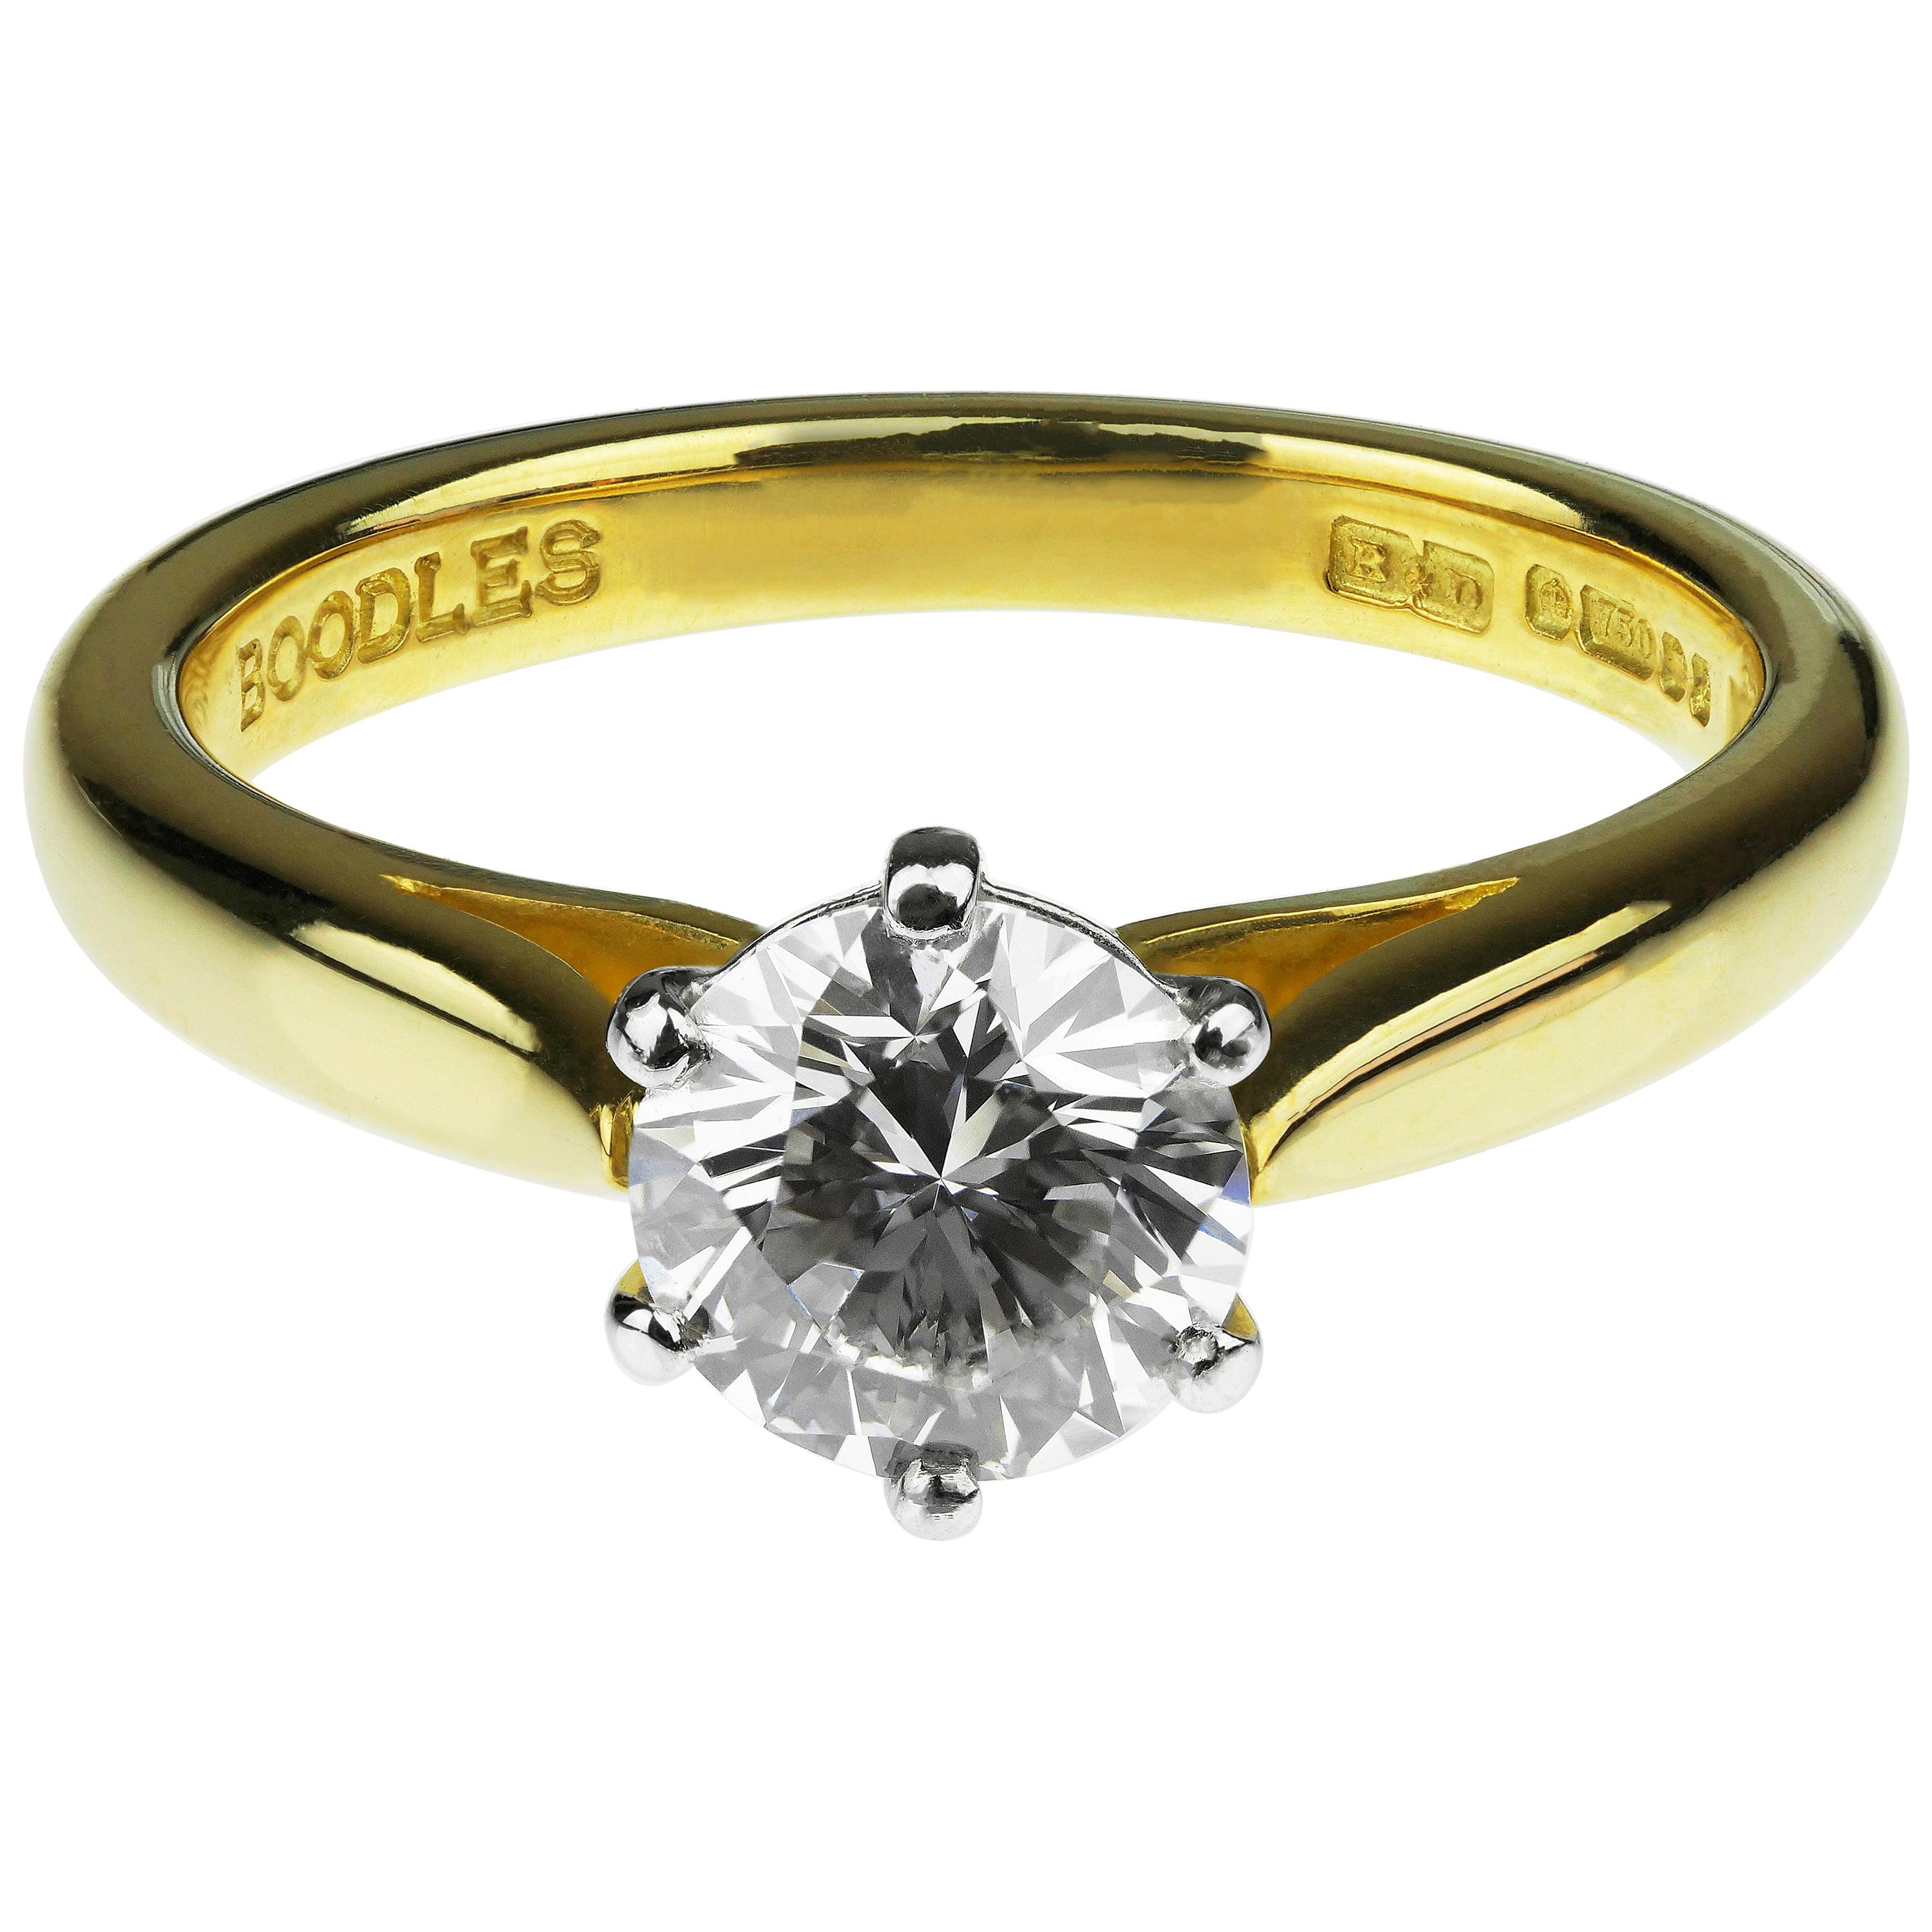 Boodles Single Stone Round Diamond Engagement Ring, British Hallmarked 18K Gold